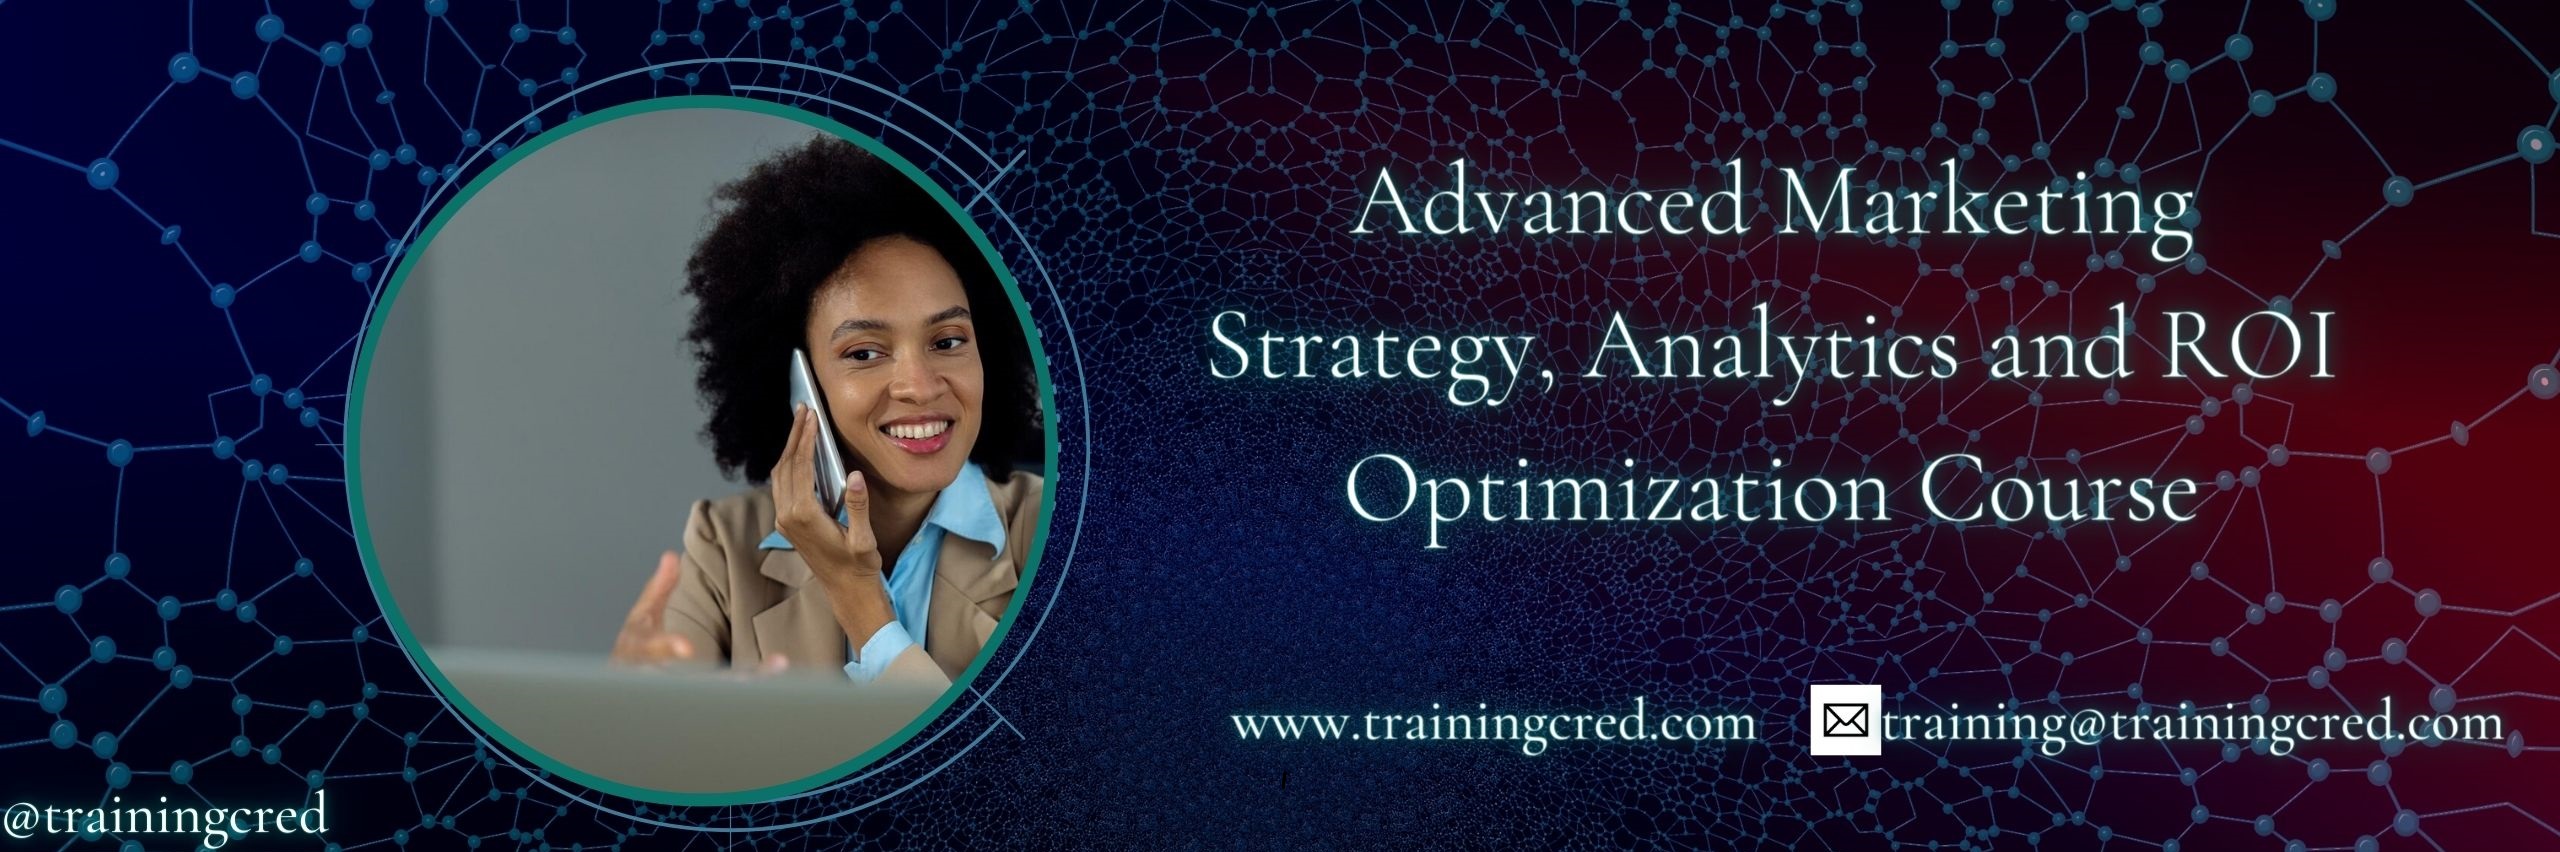 Advanced Marketing Strategy, Analytics and ROI Optimization